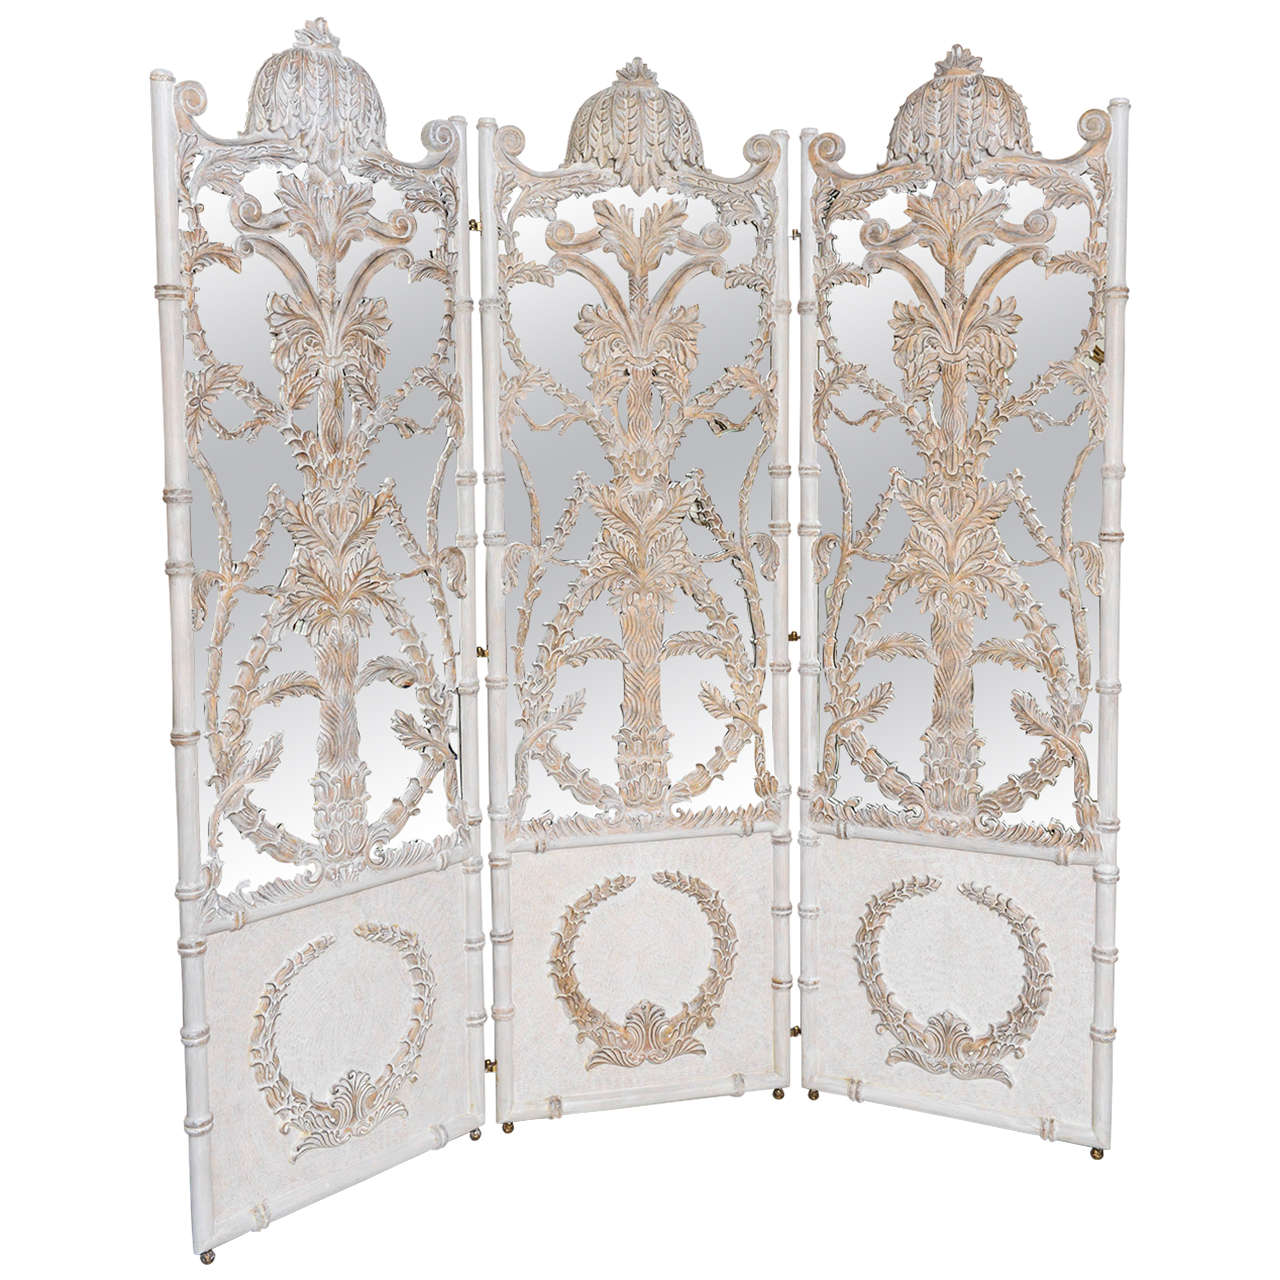 Mid-Century Hollywood Regency Three Panels Mirrored Hand-Painted Wood Screen